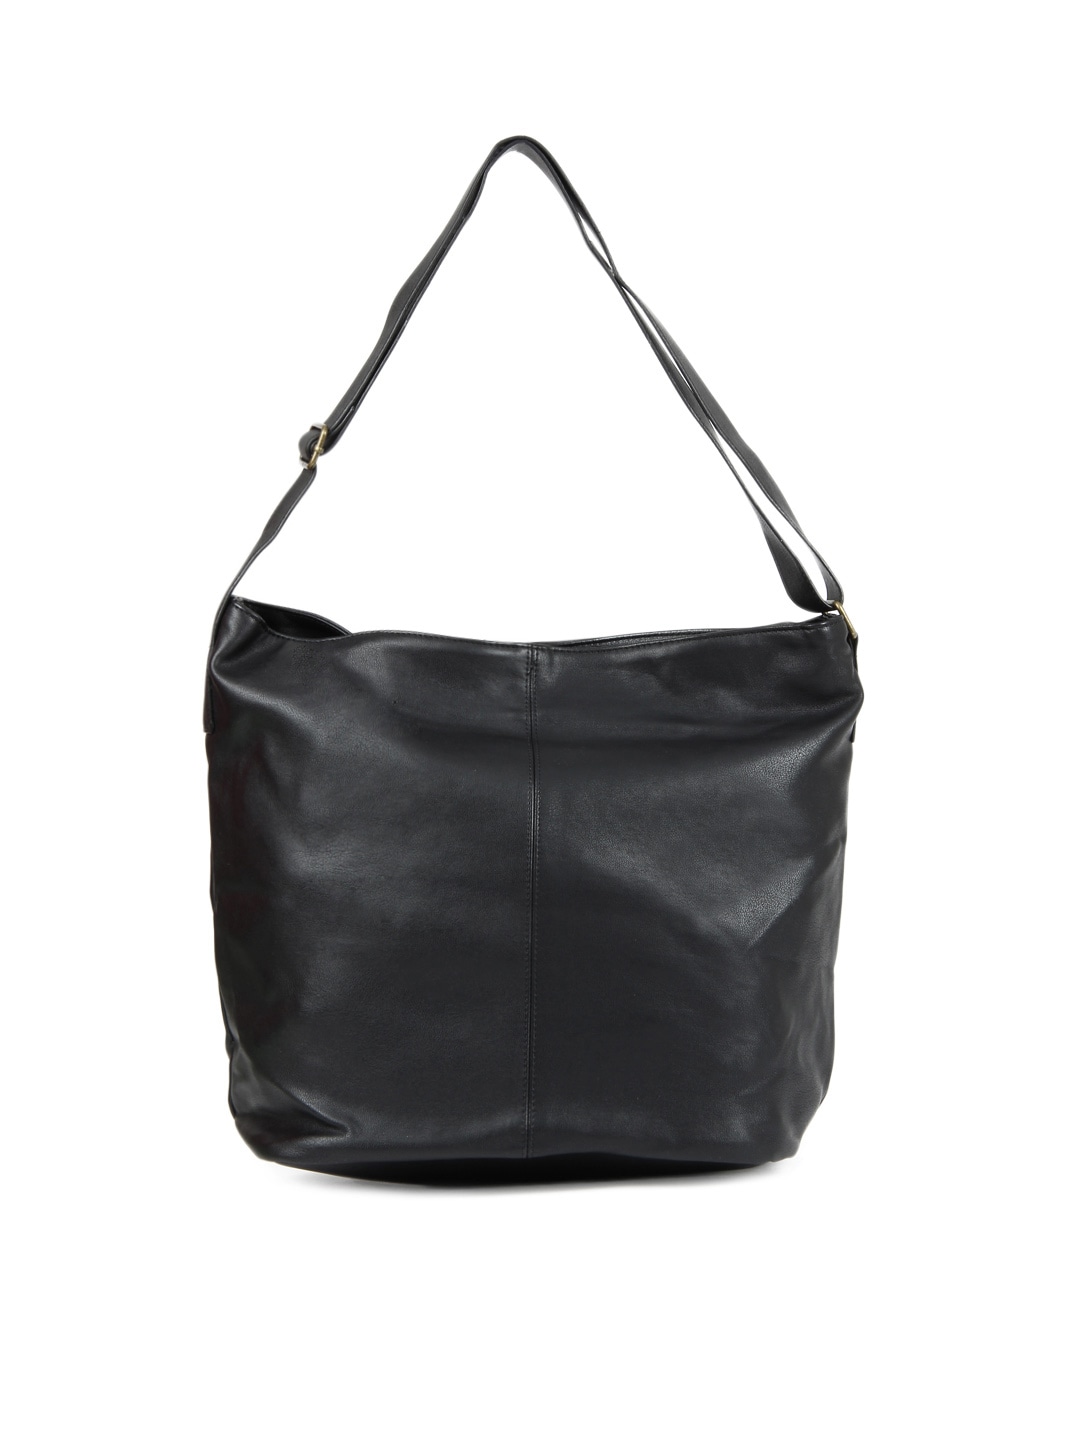 Pieces Women Black Sling Bag